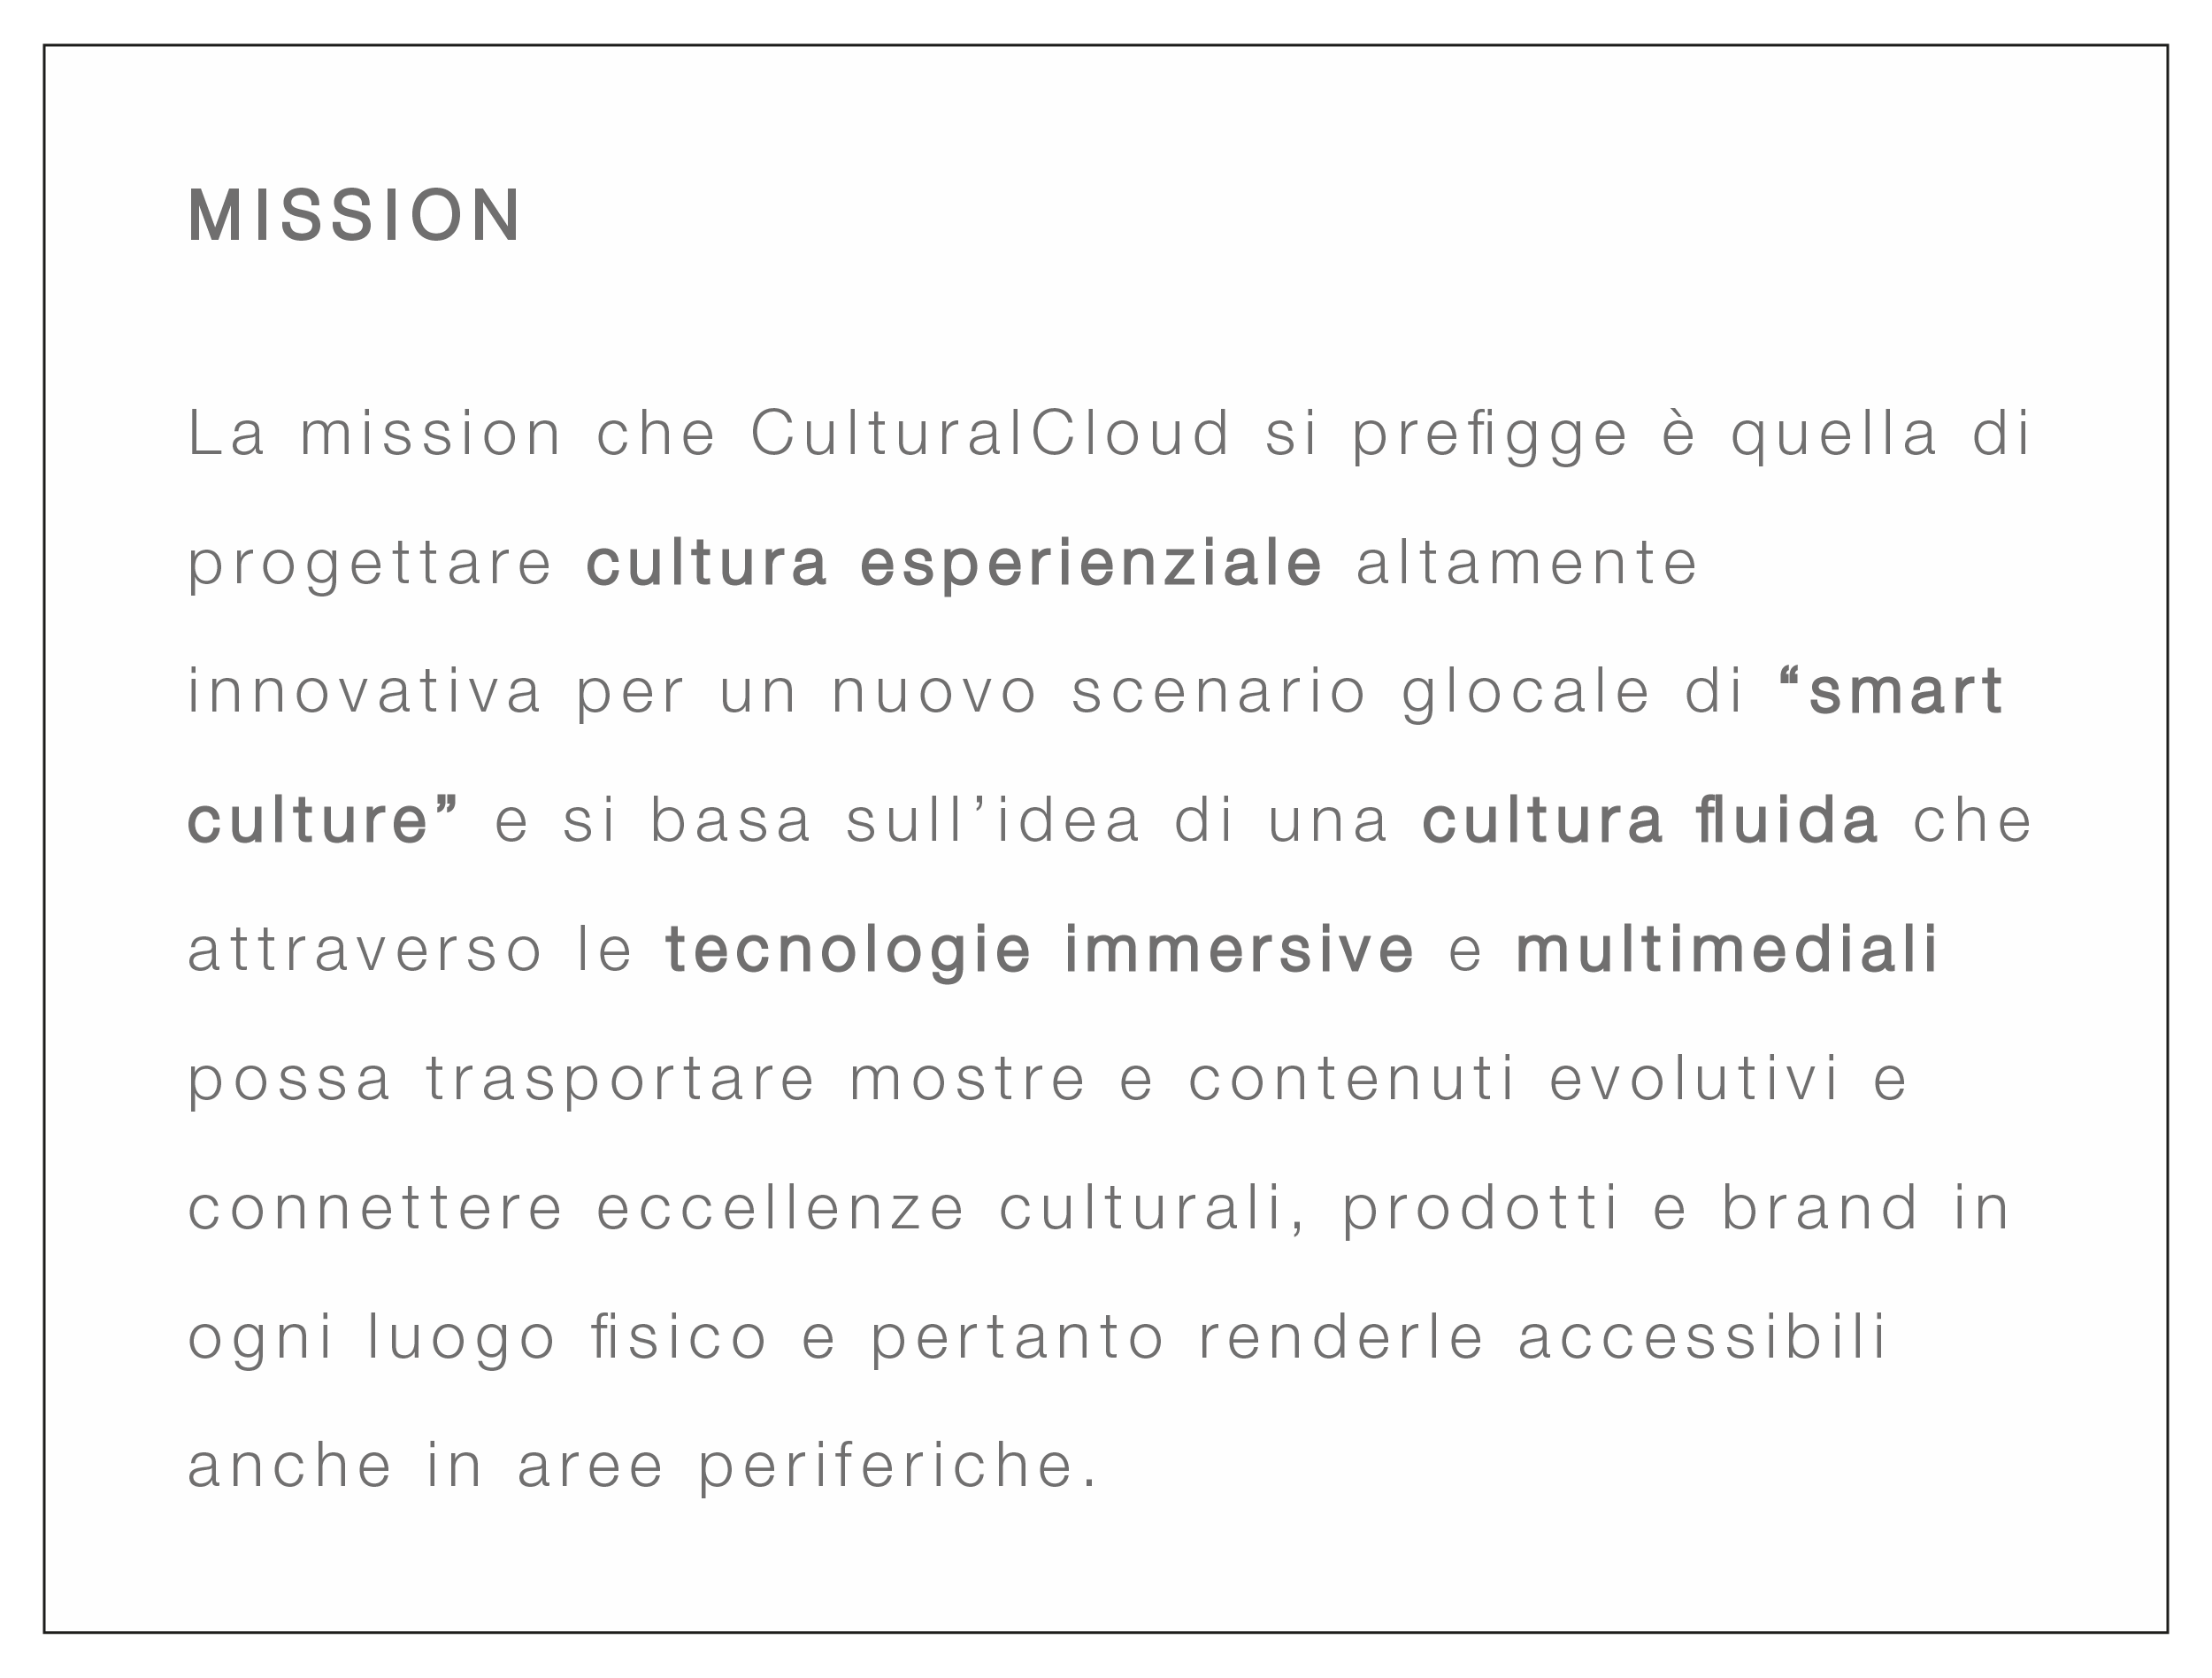 Cultura Digitale mission 1